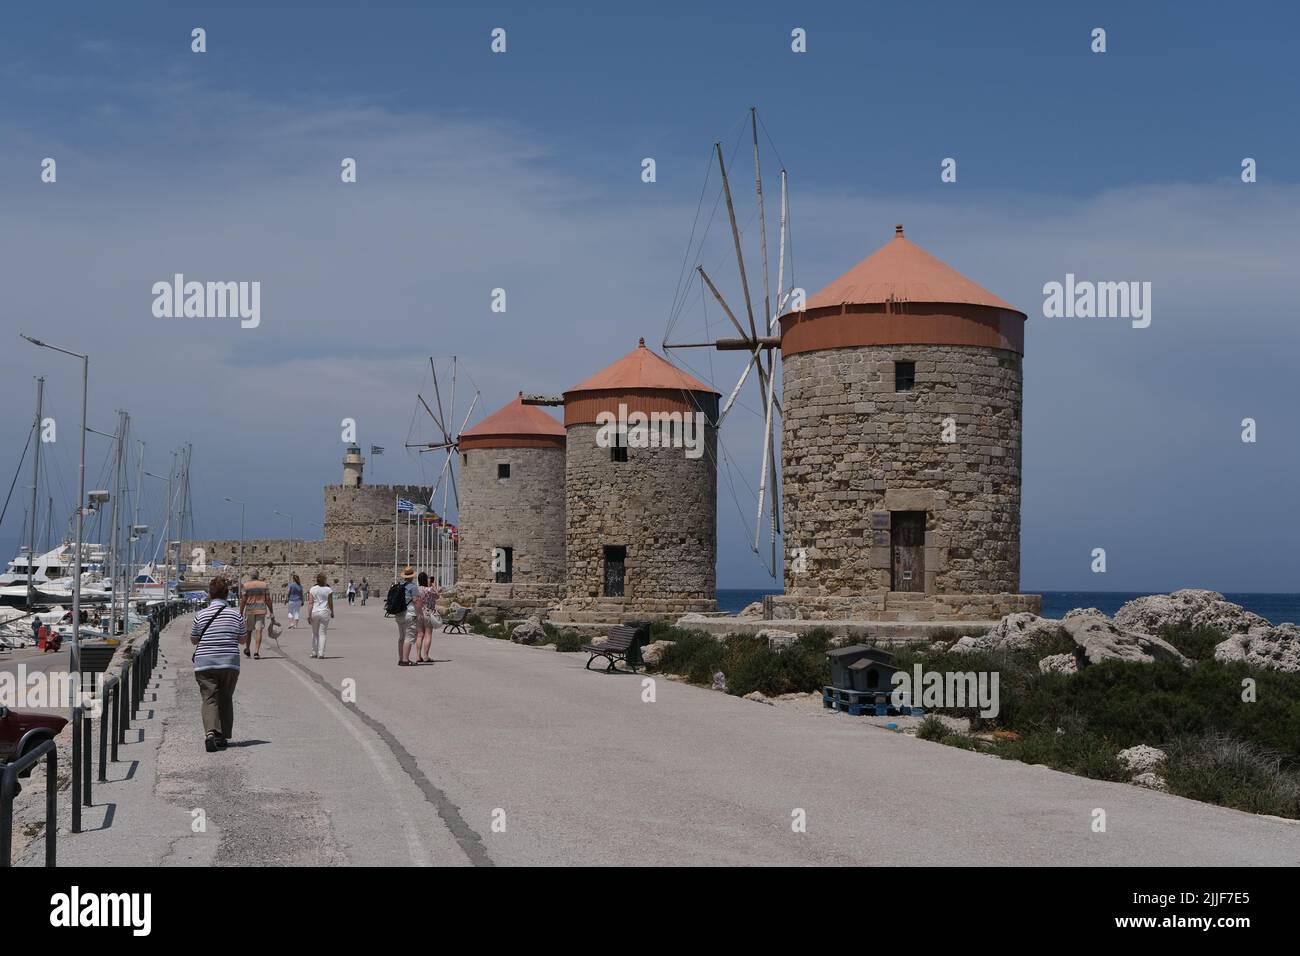 The Windmills of Mandraki in Mandraki Harbour on the island of Rhodes in Greece Stock Photo